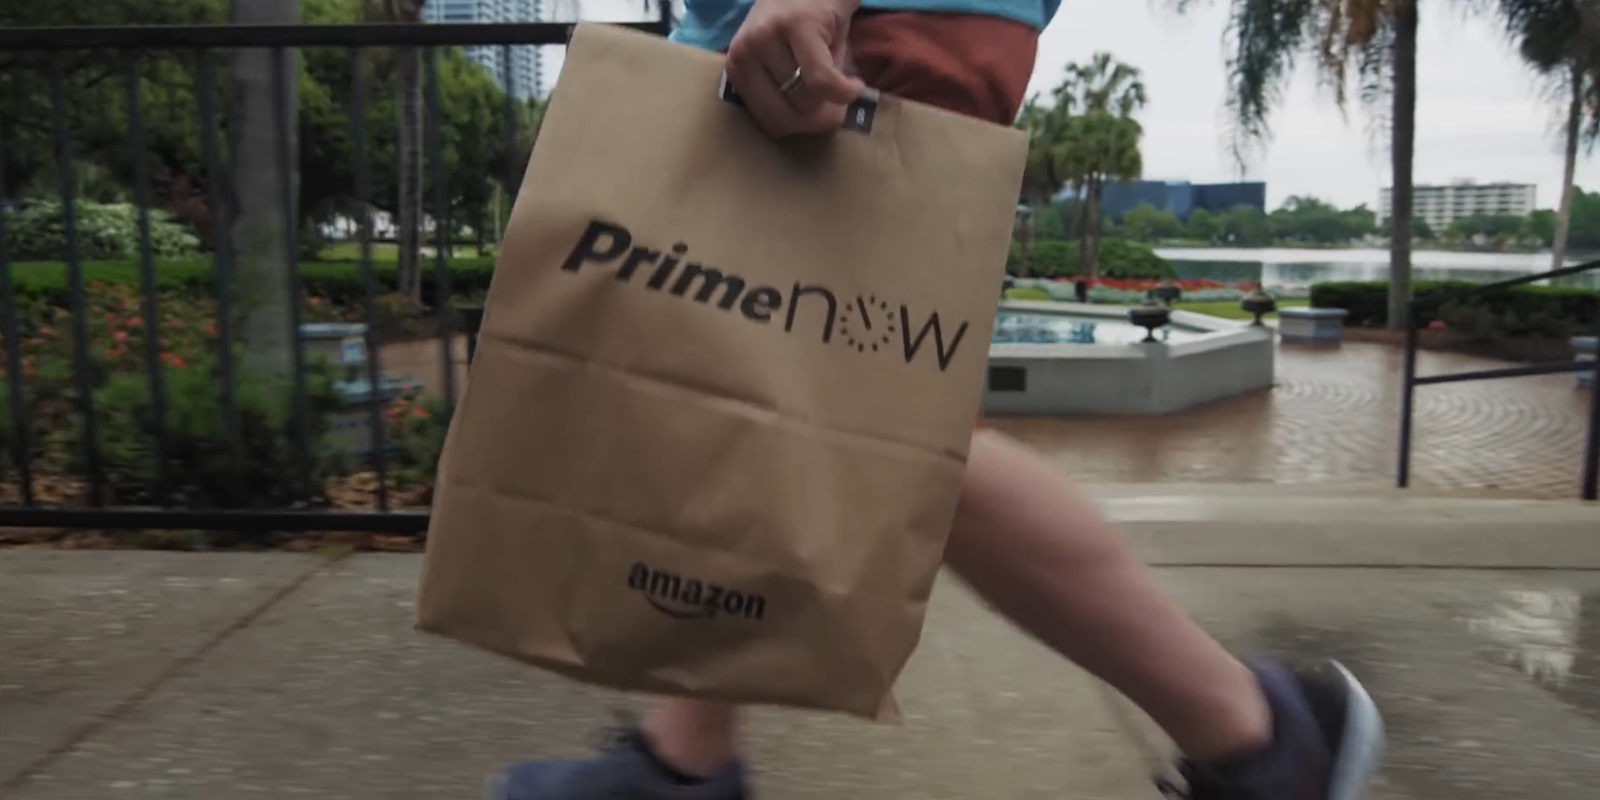 amazon prime now delivery